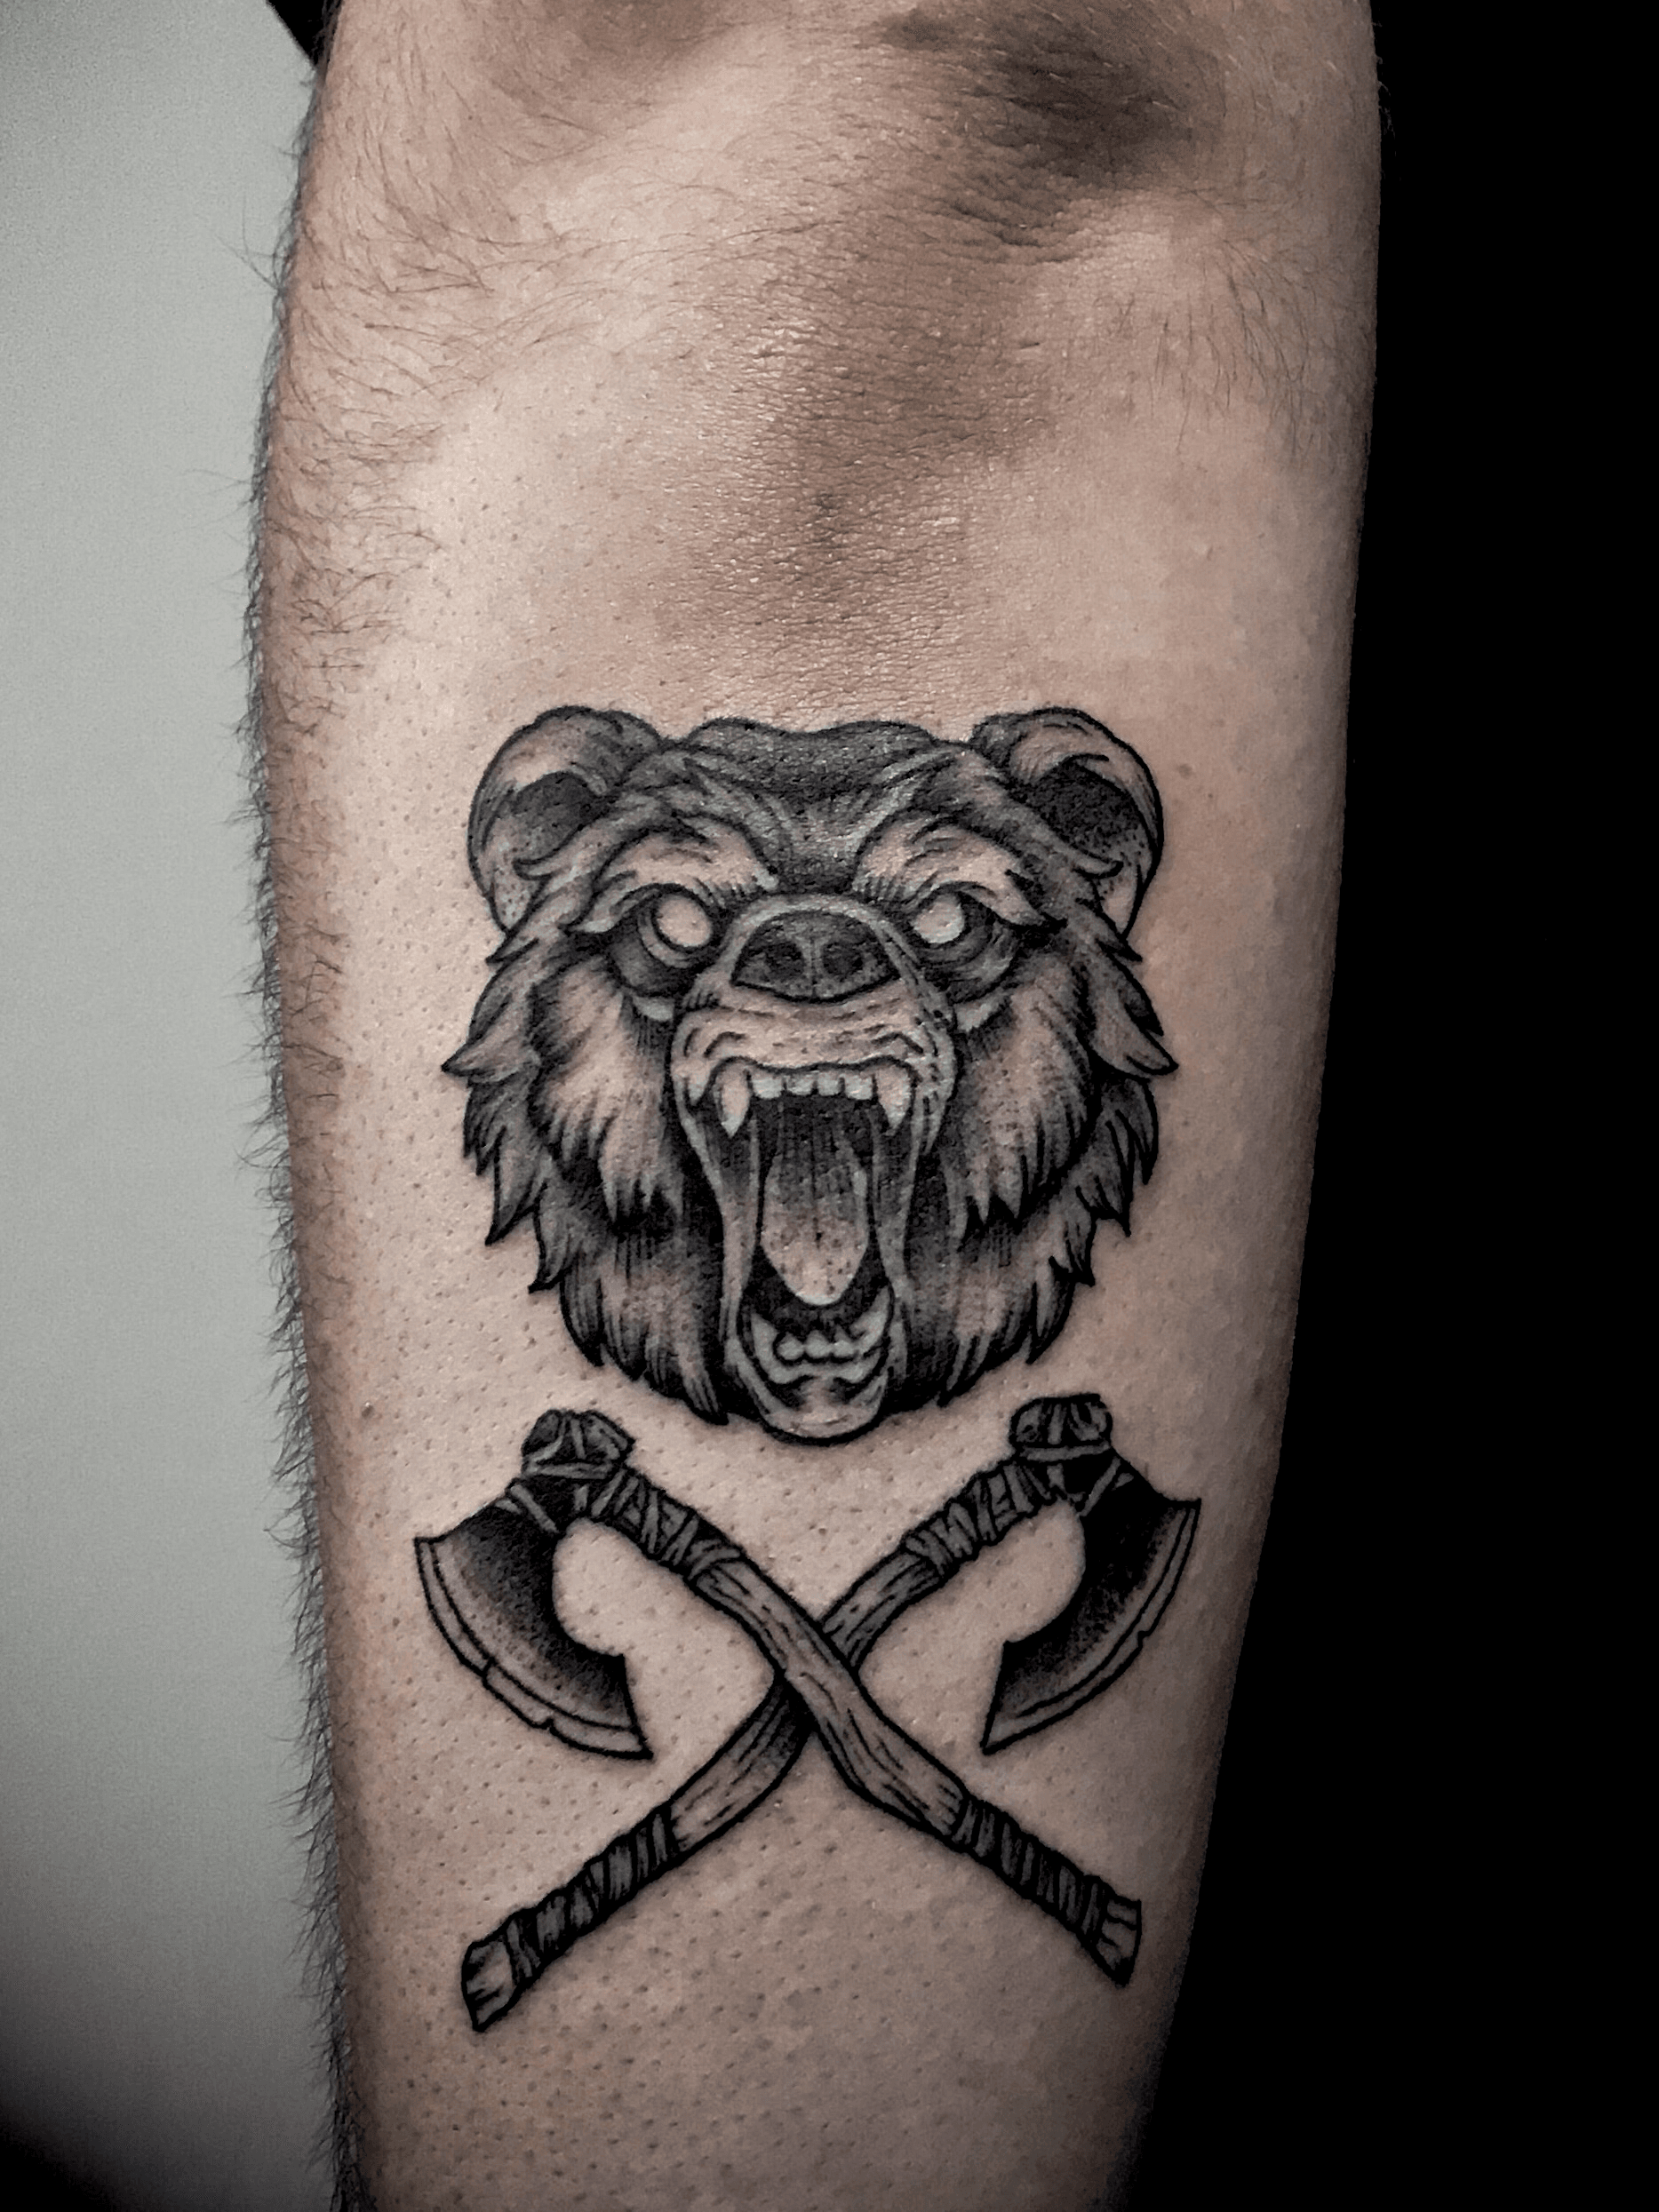 Panda bear tattoo on the right thigh